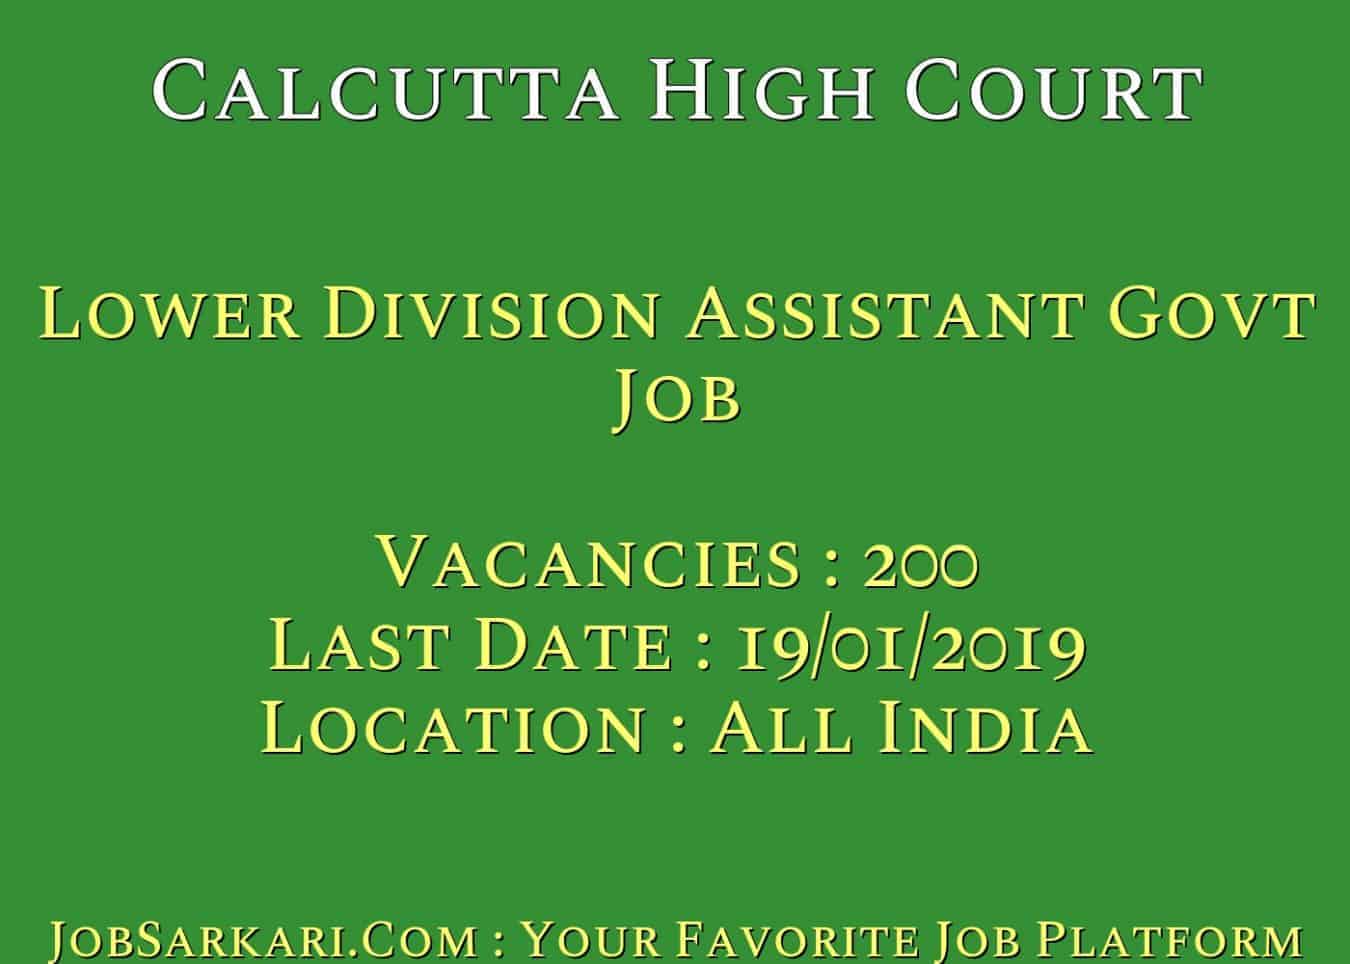 Calcutta High Court Recruitment 2018 For Lower Division Assistant Govt Job